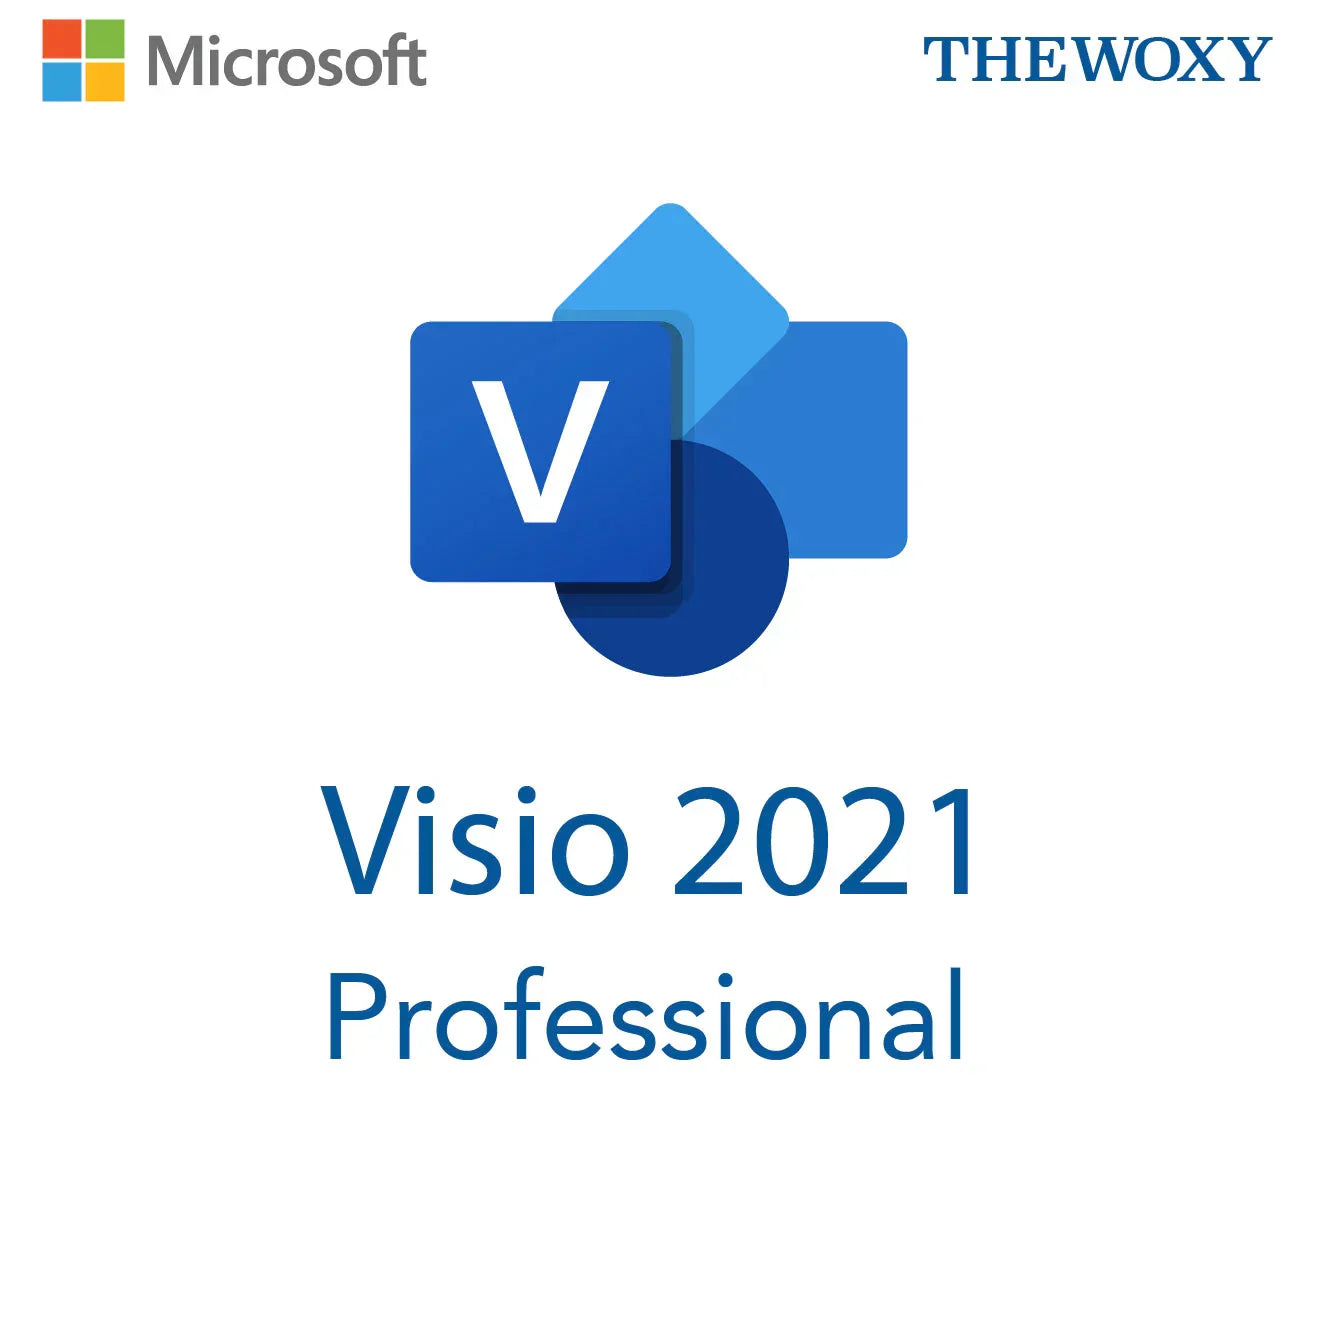 Microsoft Visio 2021 Professional - Lifetime License Key for 1 PC